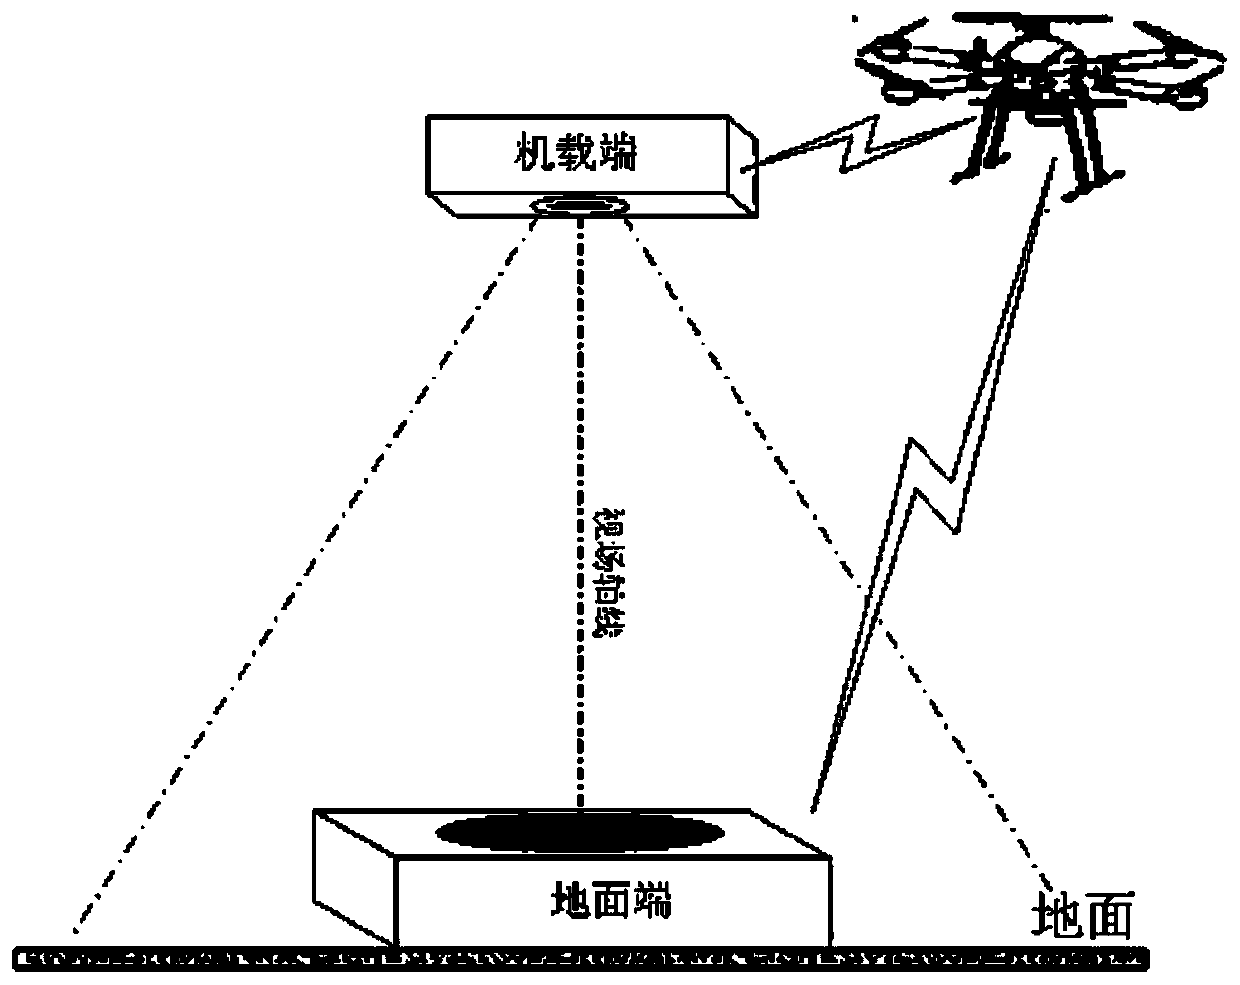 UAV landing navigation method and device based on GPS and image vision fusion